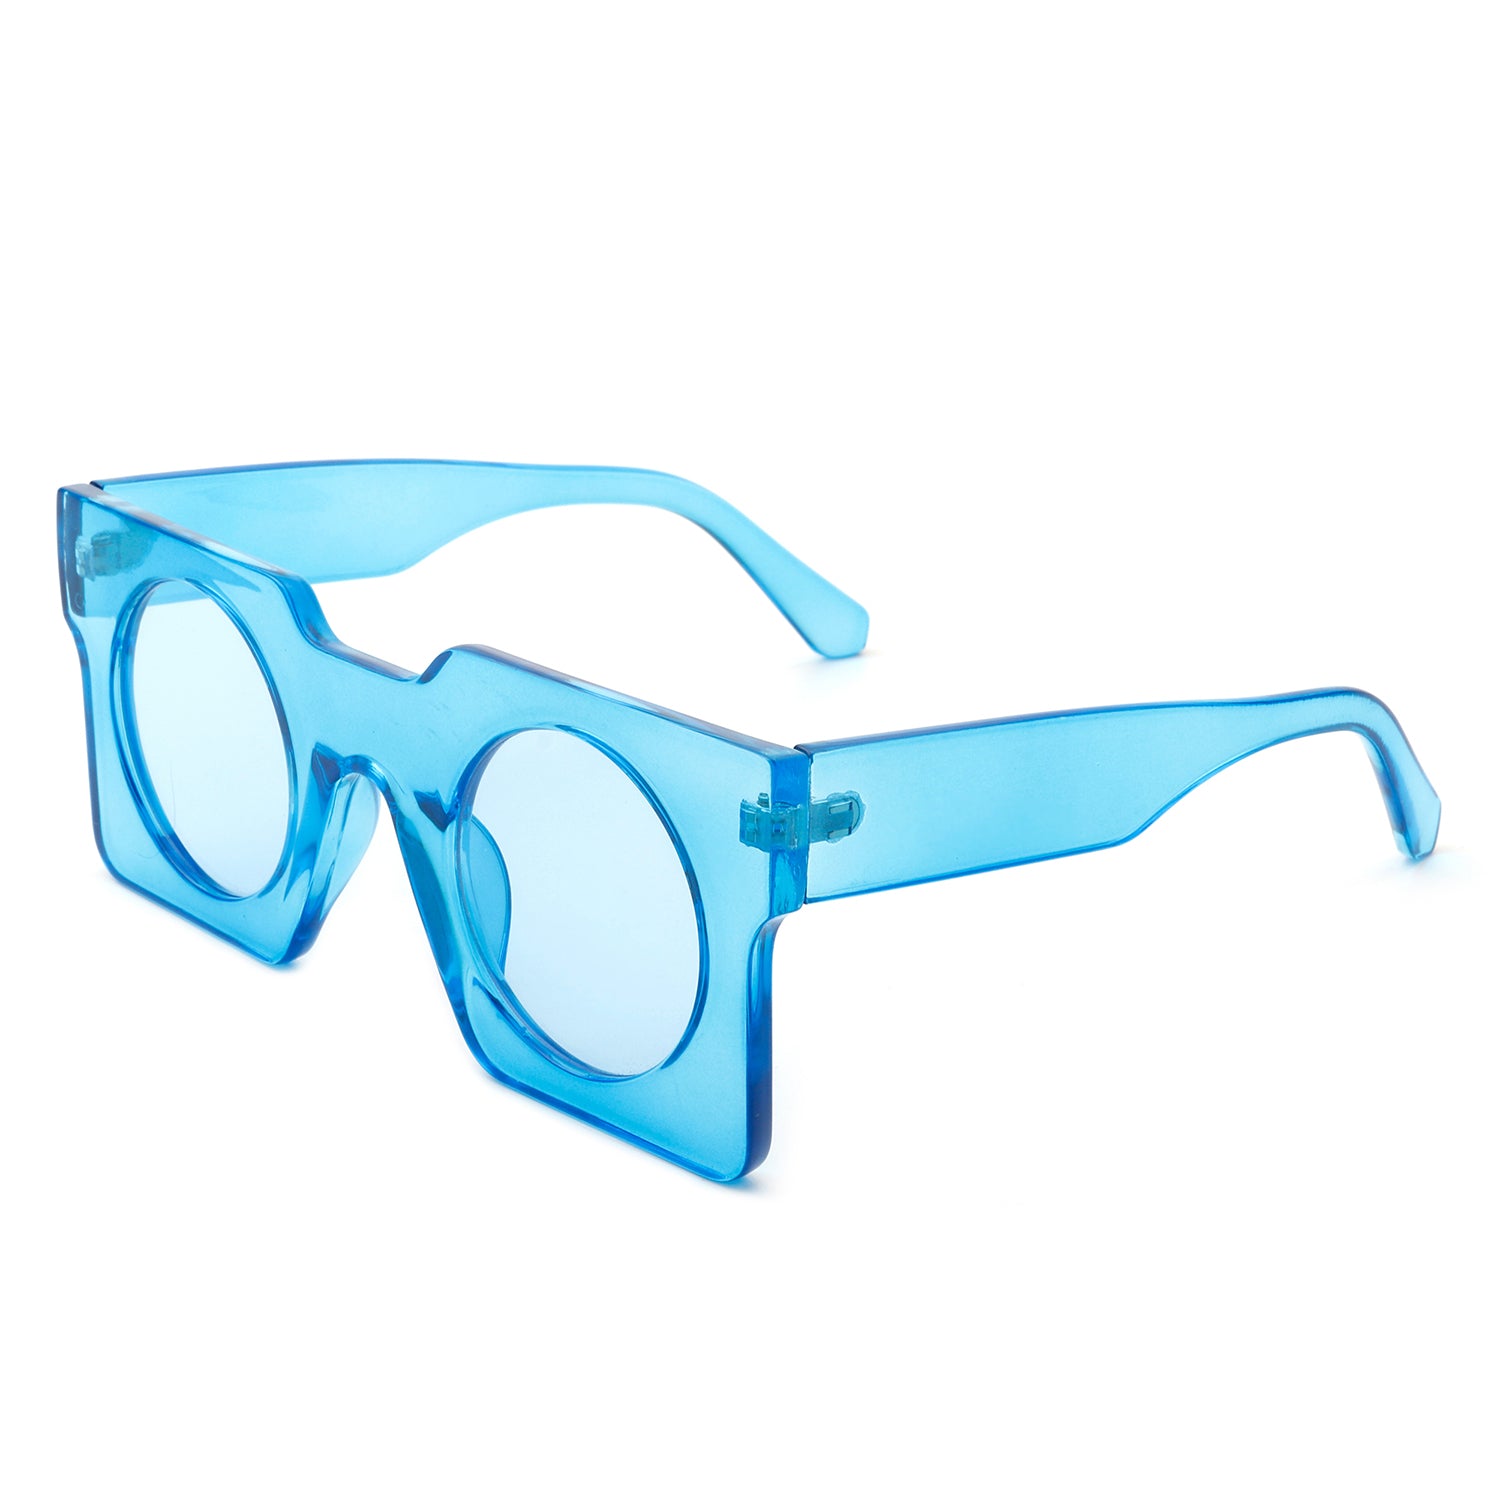 Eyewear: Square Blue Light Glasses, acetate — Fashion